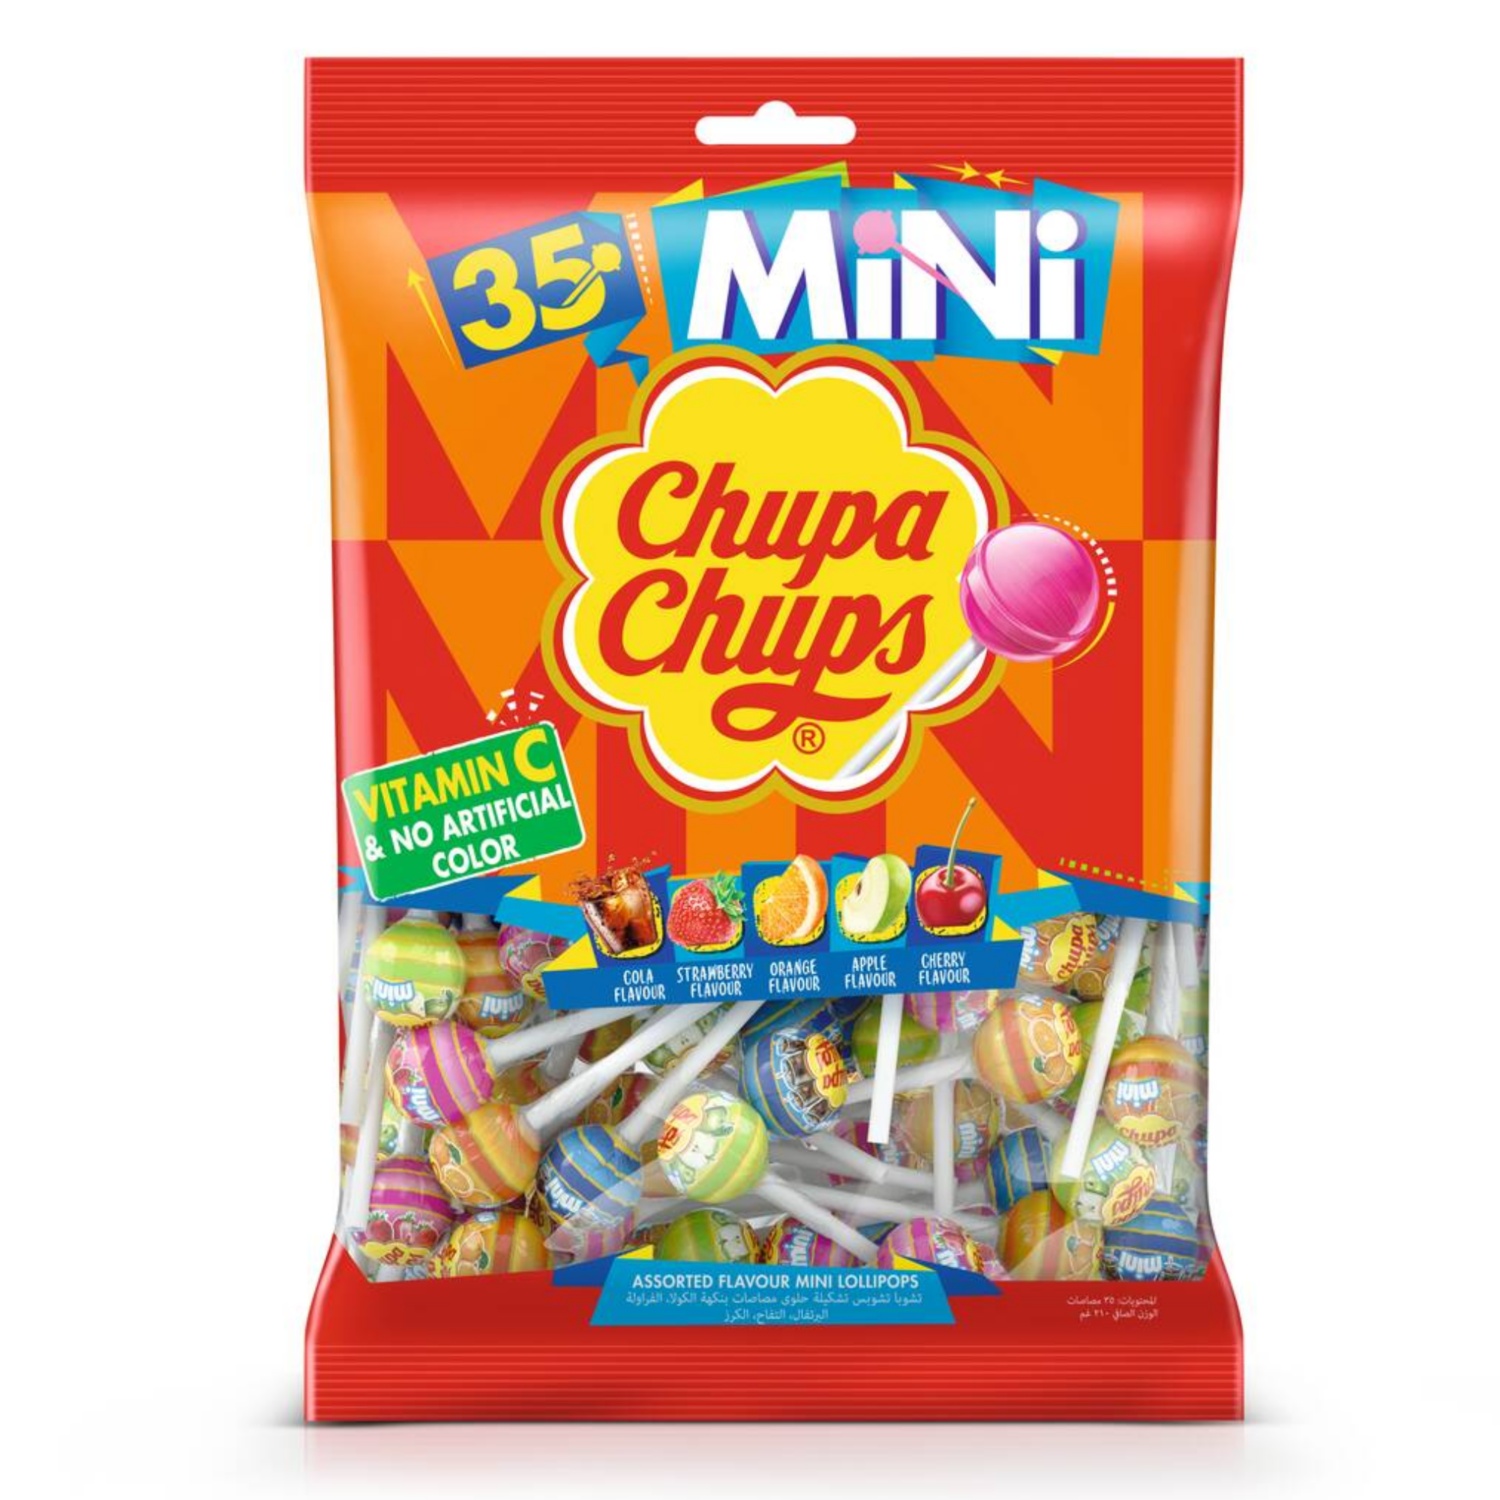 CHUPA CHUPS Mini